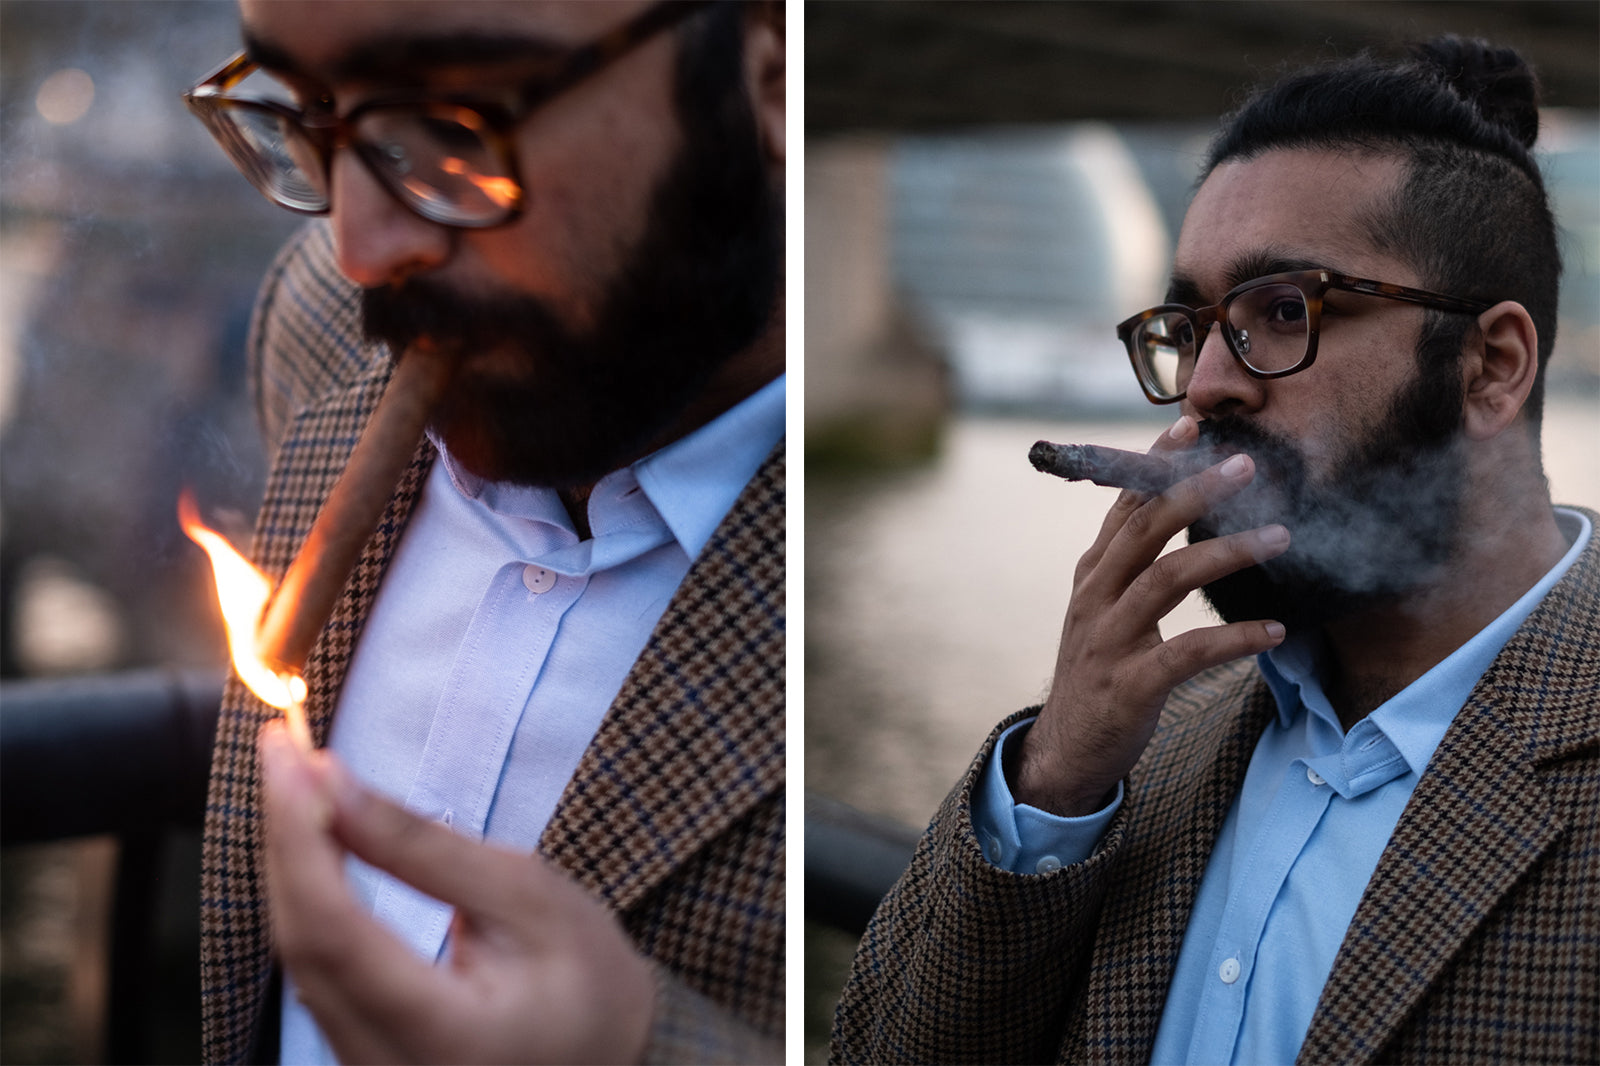 Rikesh genießt eine Petit Corona Zigarre in London